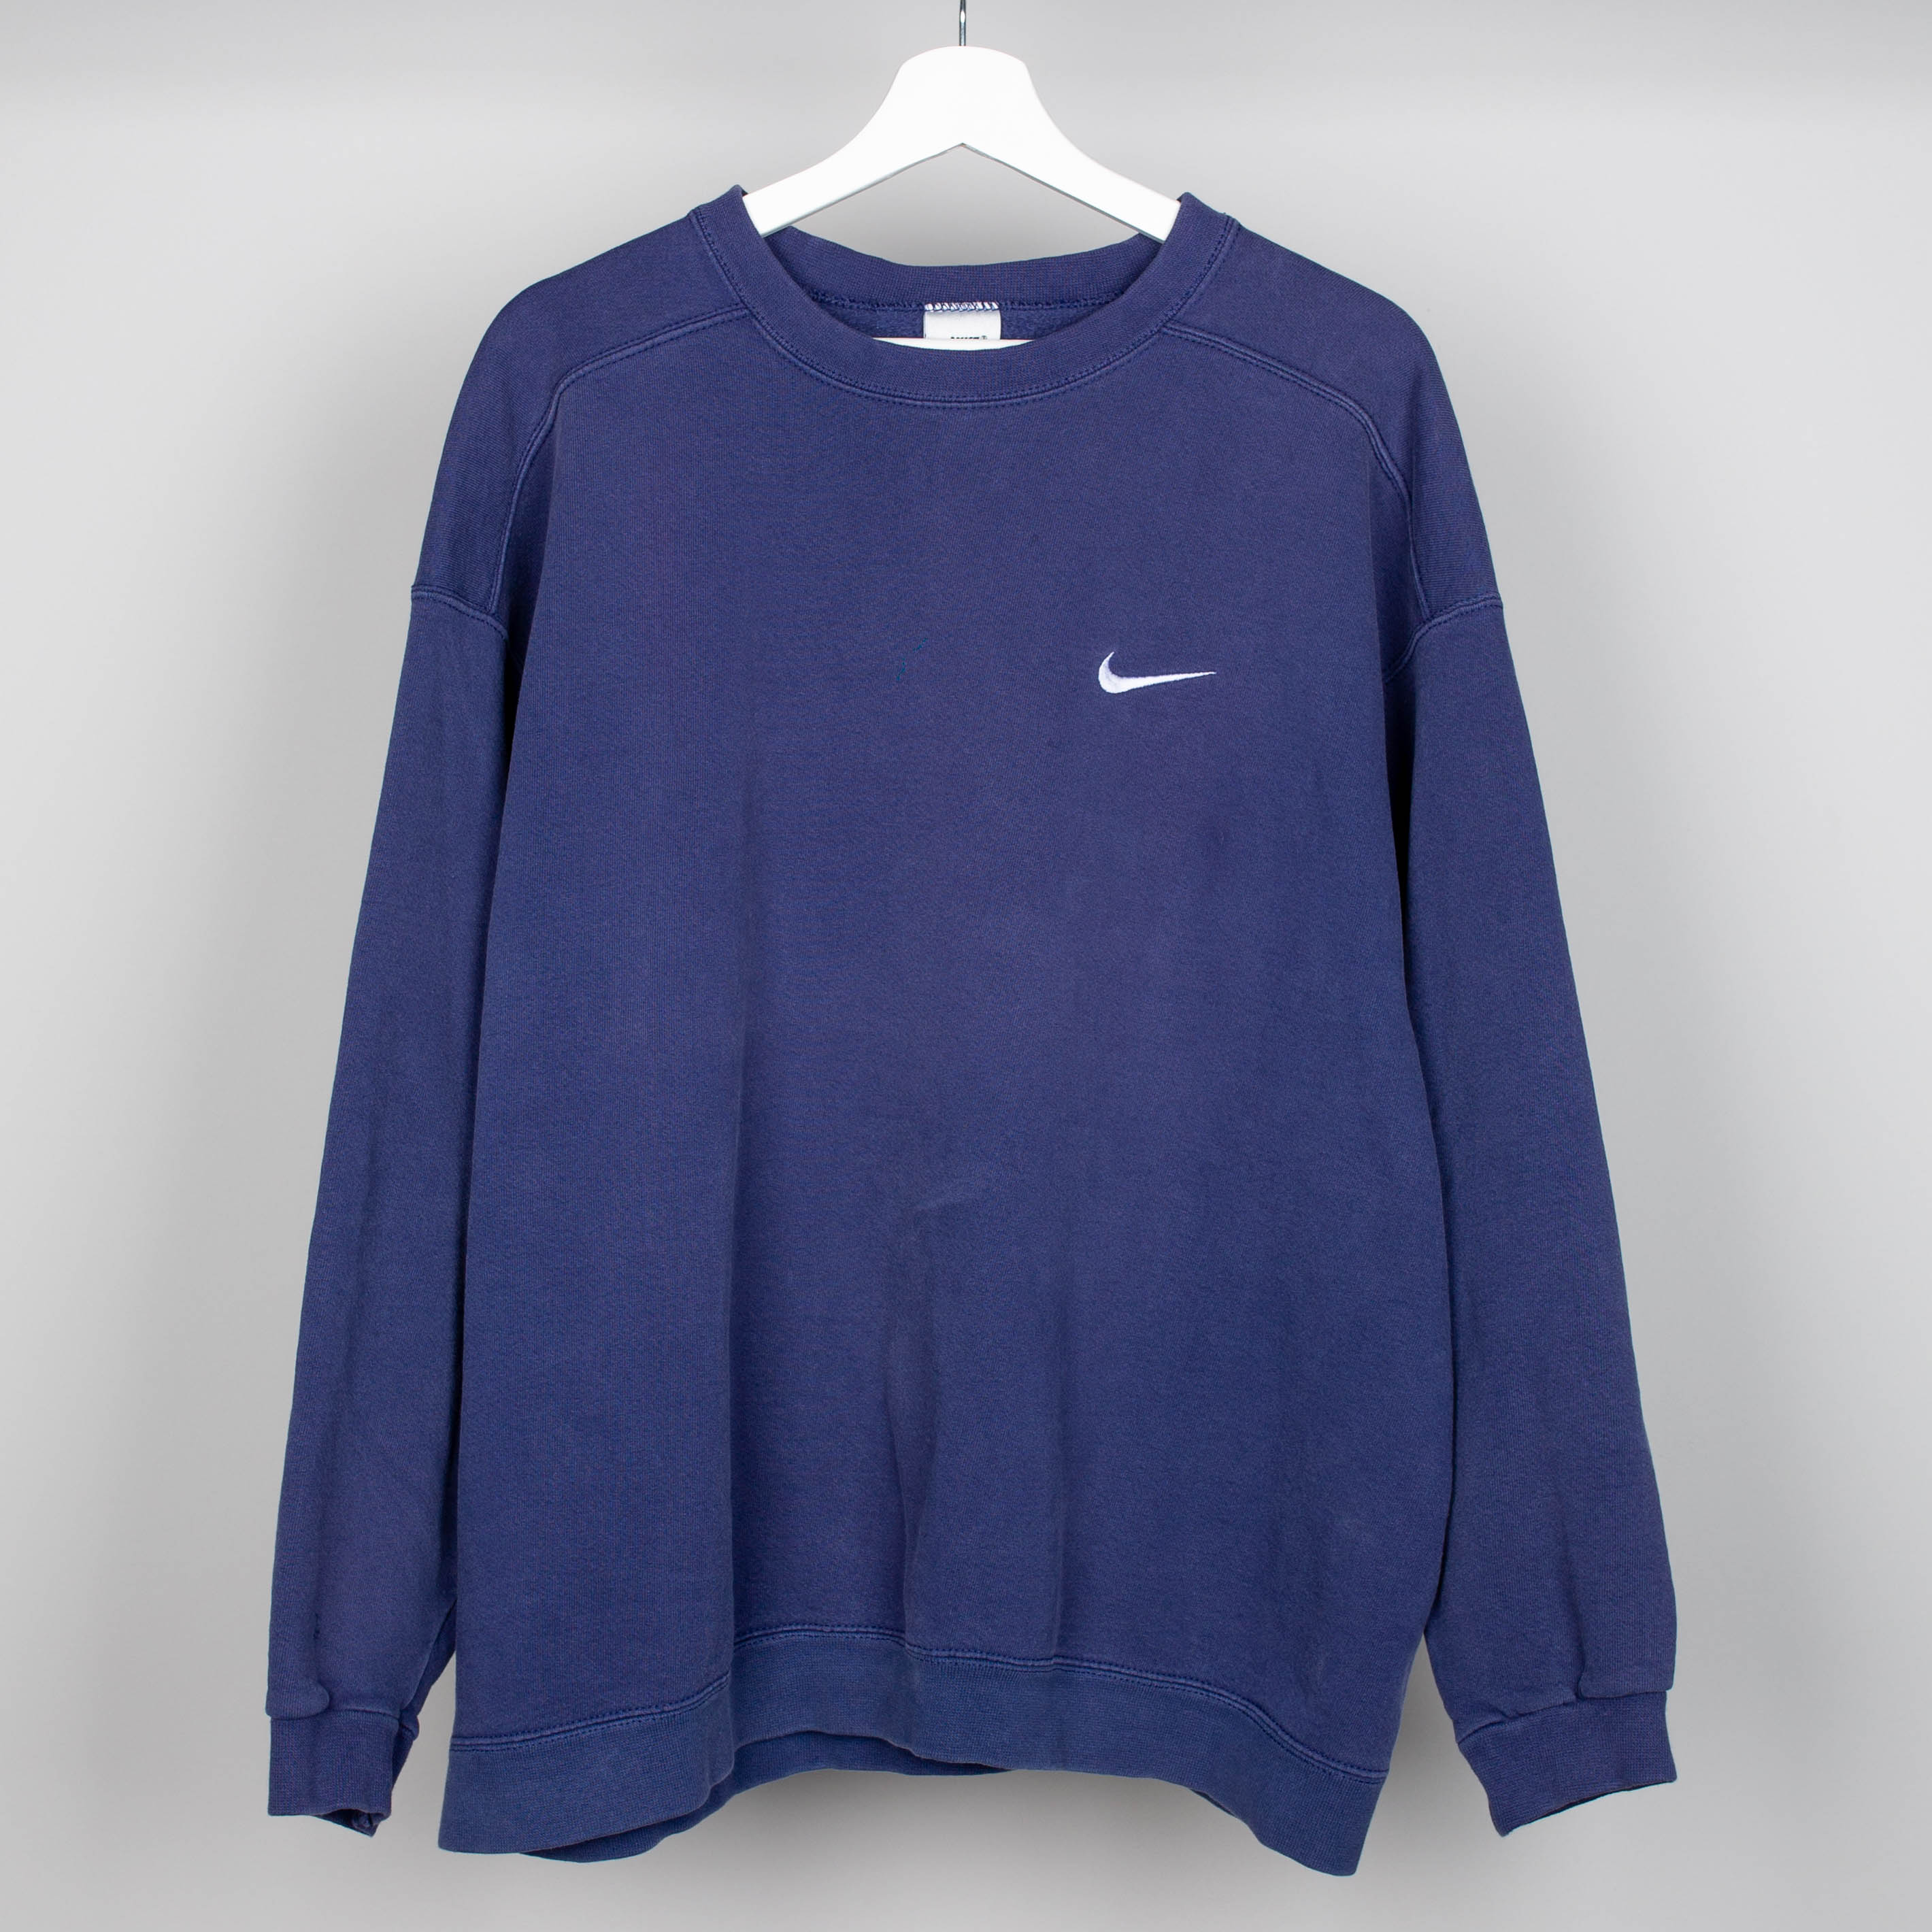 90's Purple Nike Crewneck Size XL